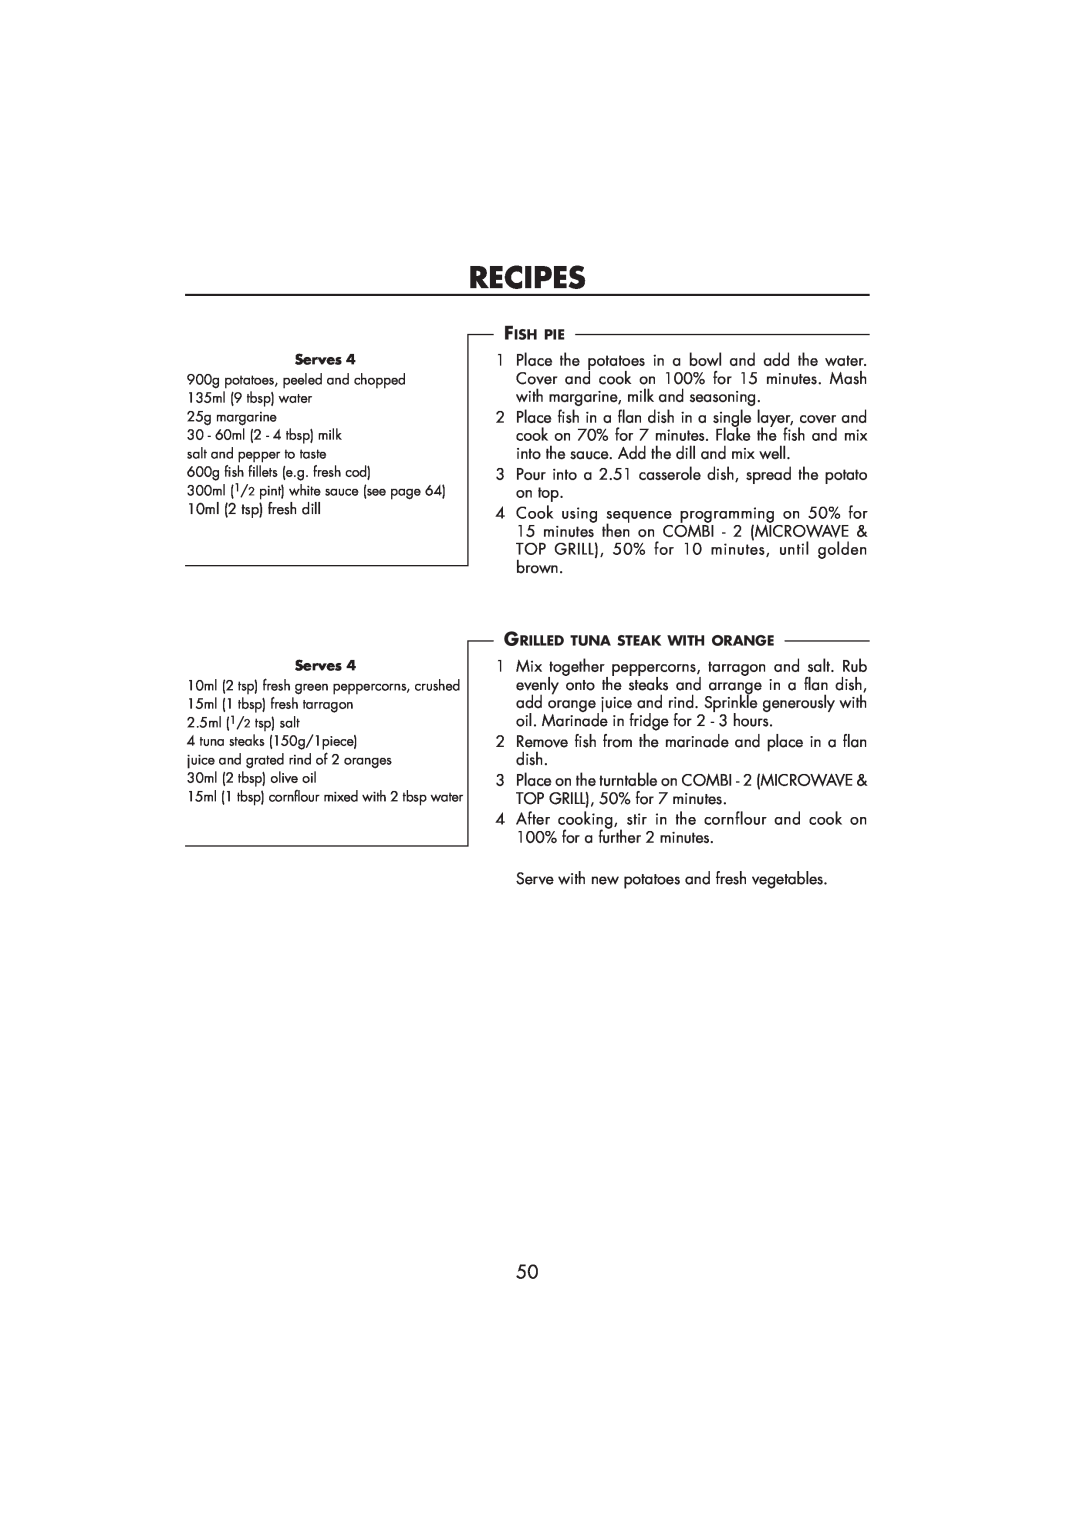 Sharp R-890SLM operation manual Recipes, 10ml 2 tsp fresh dill 